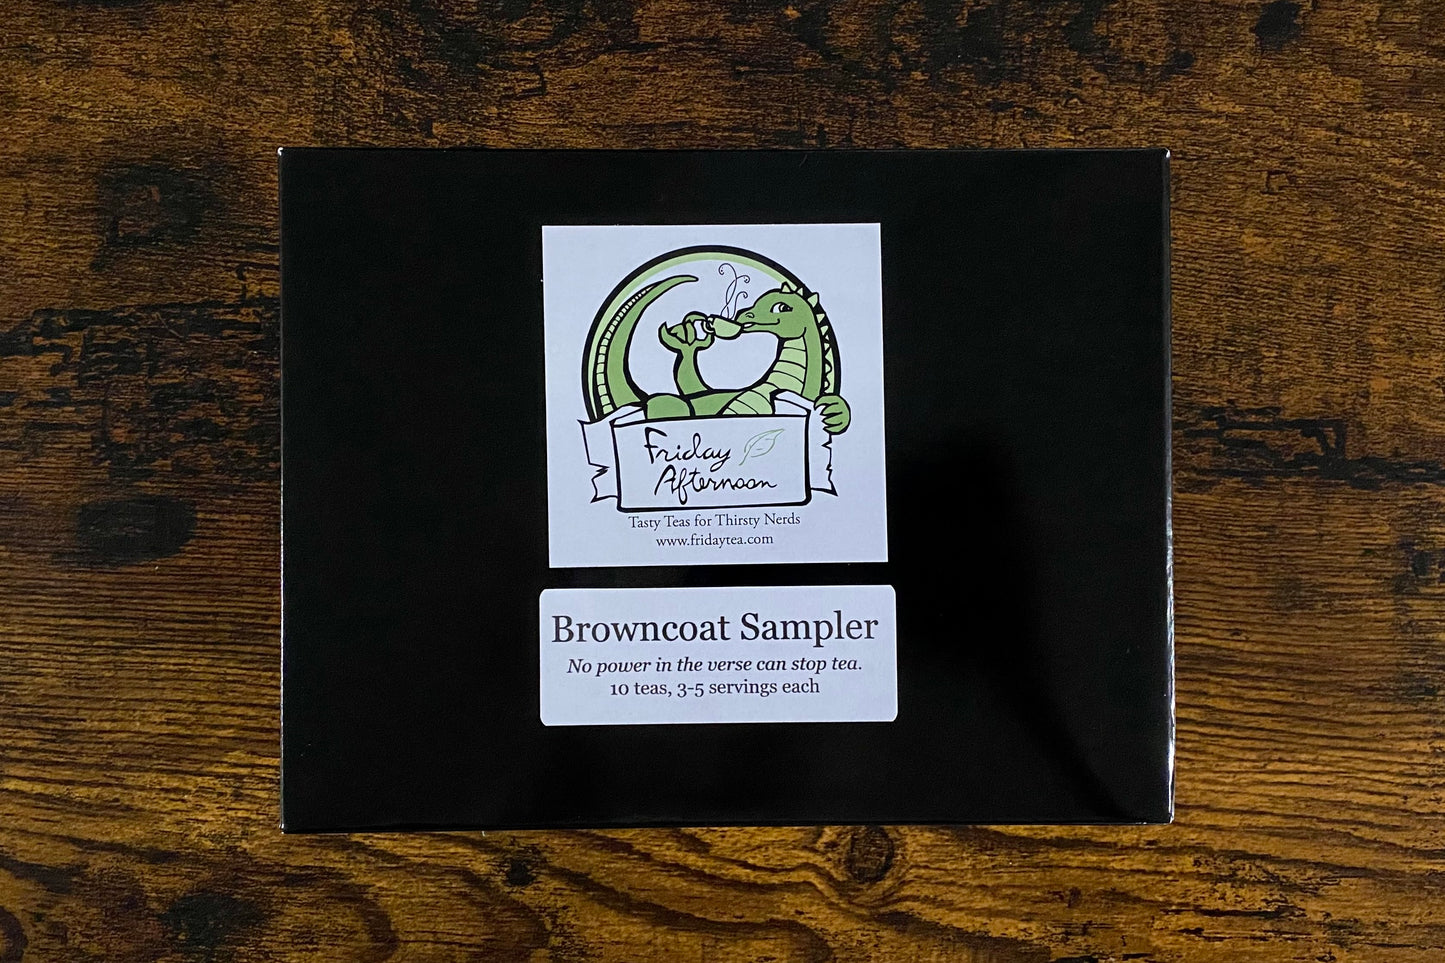 Browncoat Sampler